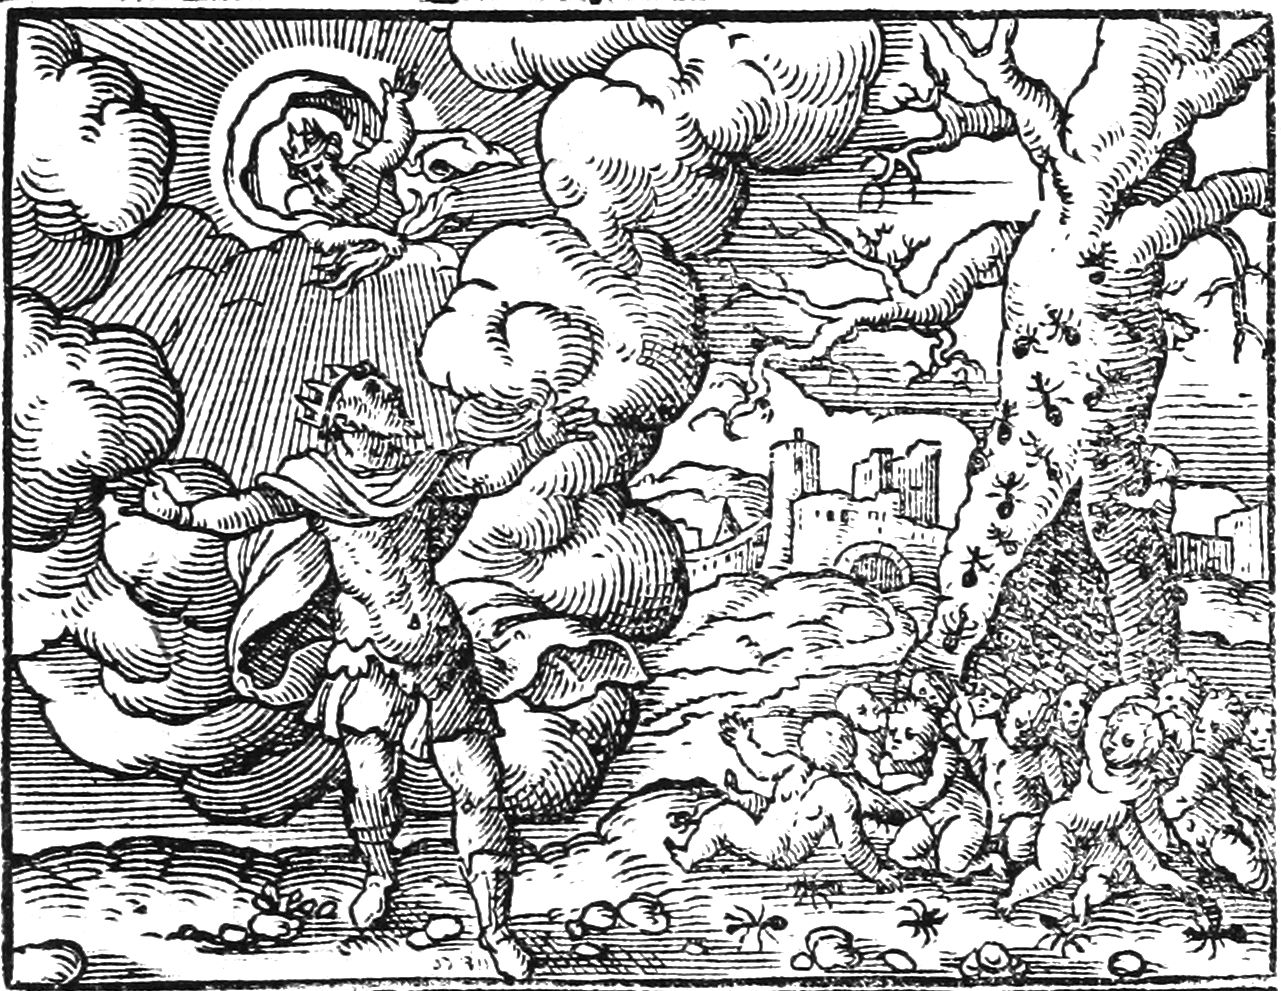 Virgil Solis (1514–1562), Myrmidons (1581), engraving for Ovid’s Metamorphoses Book VII, 622-642, fol. 94 v., imago 11, location not known.